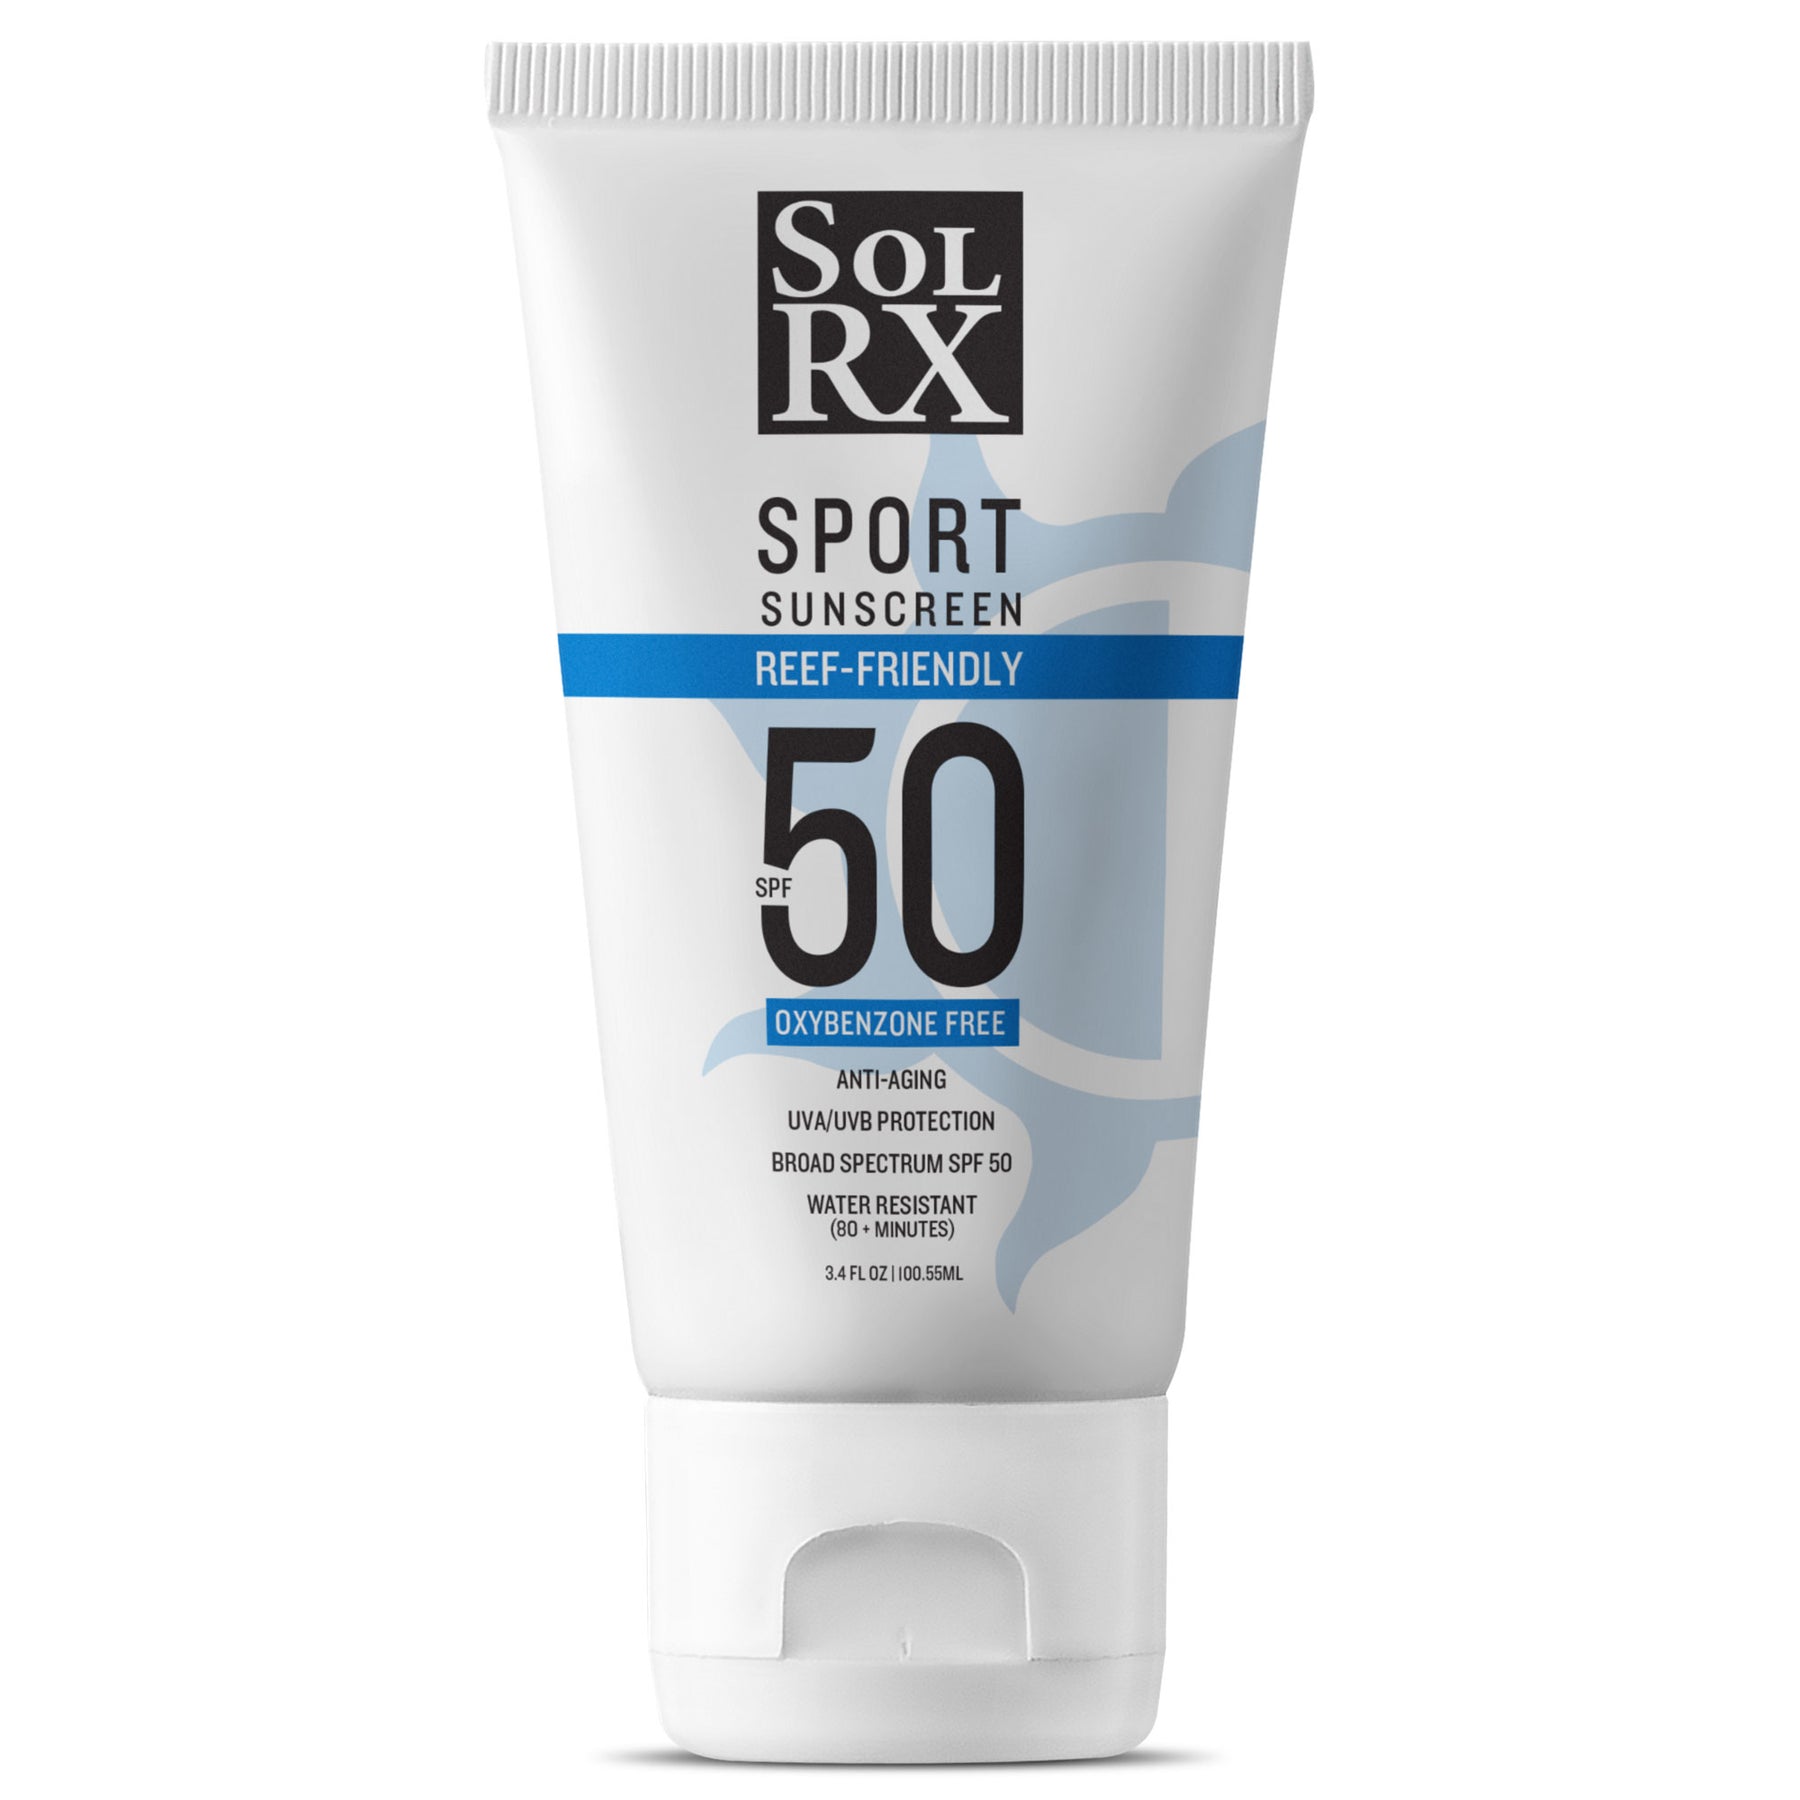 SolRX SPORT SPF 50 Sunscreen - Oxybenzone Free (3.4oz) – SolRX Sunscreen